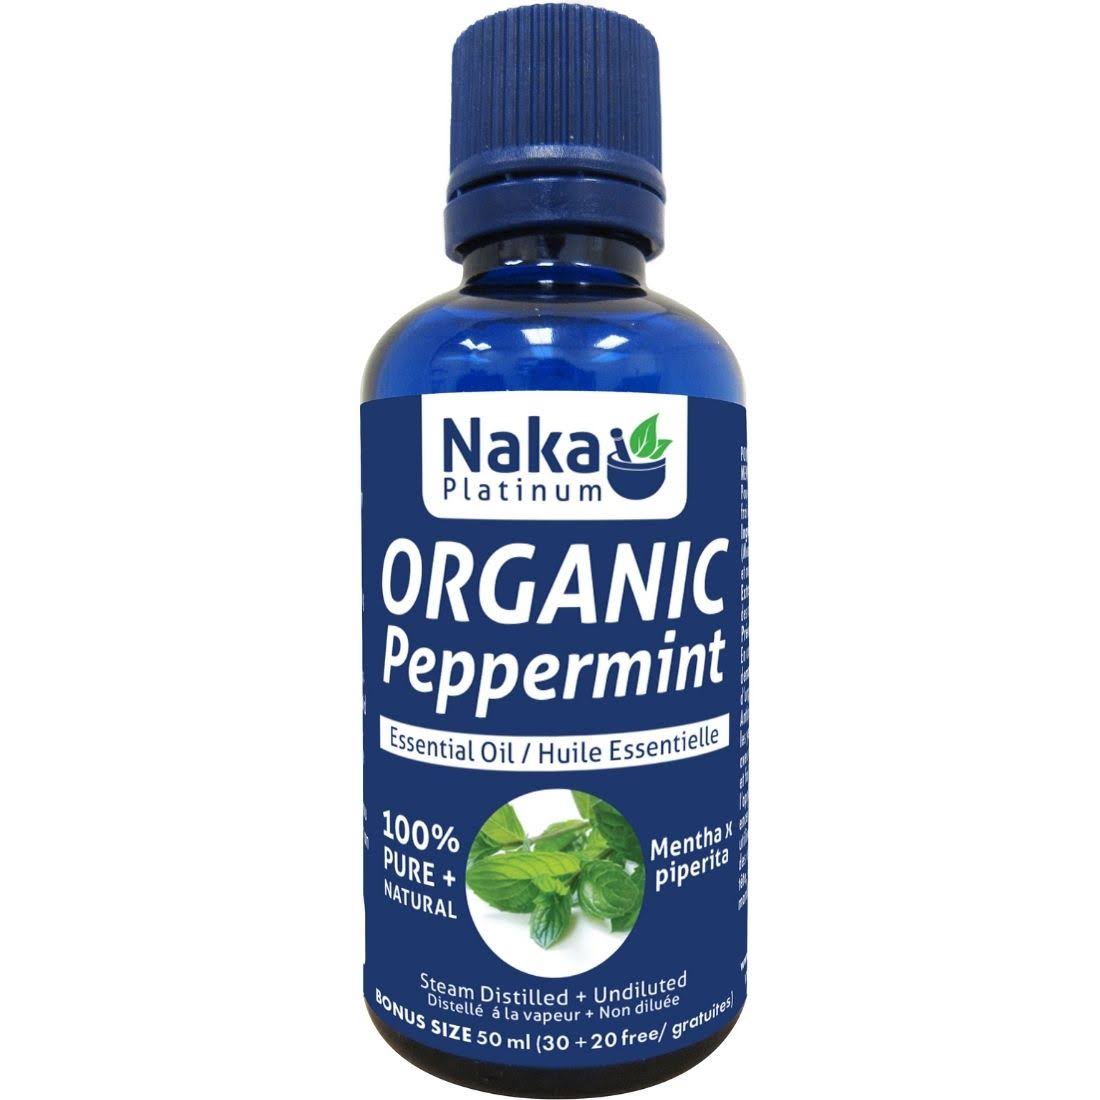 Naka Platinum Organic Peppermint Essential Oil, 50ml